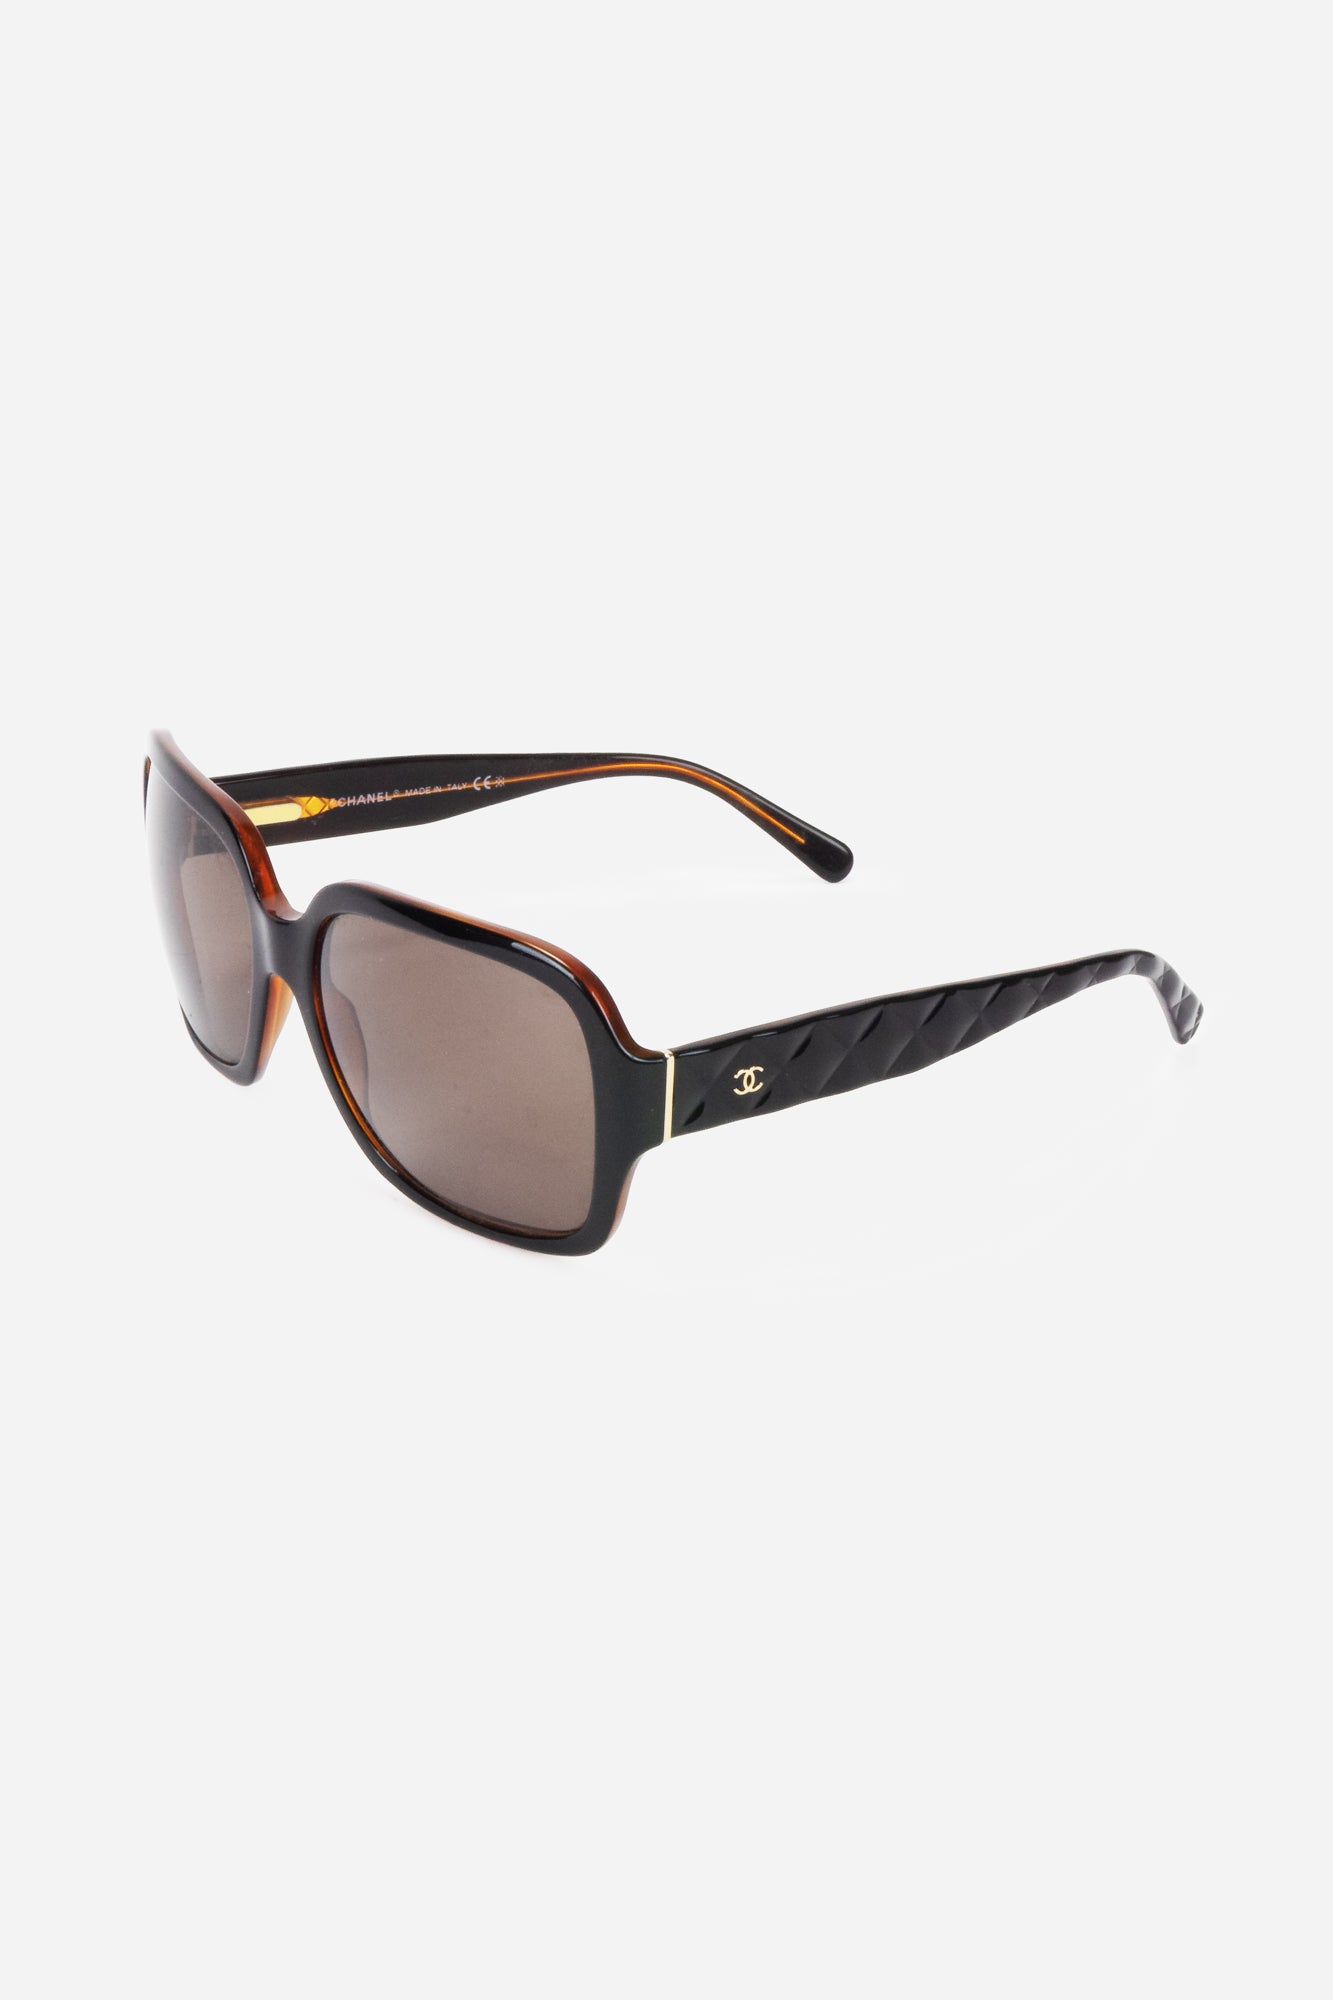 Brown Square Frame Sunglasses